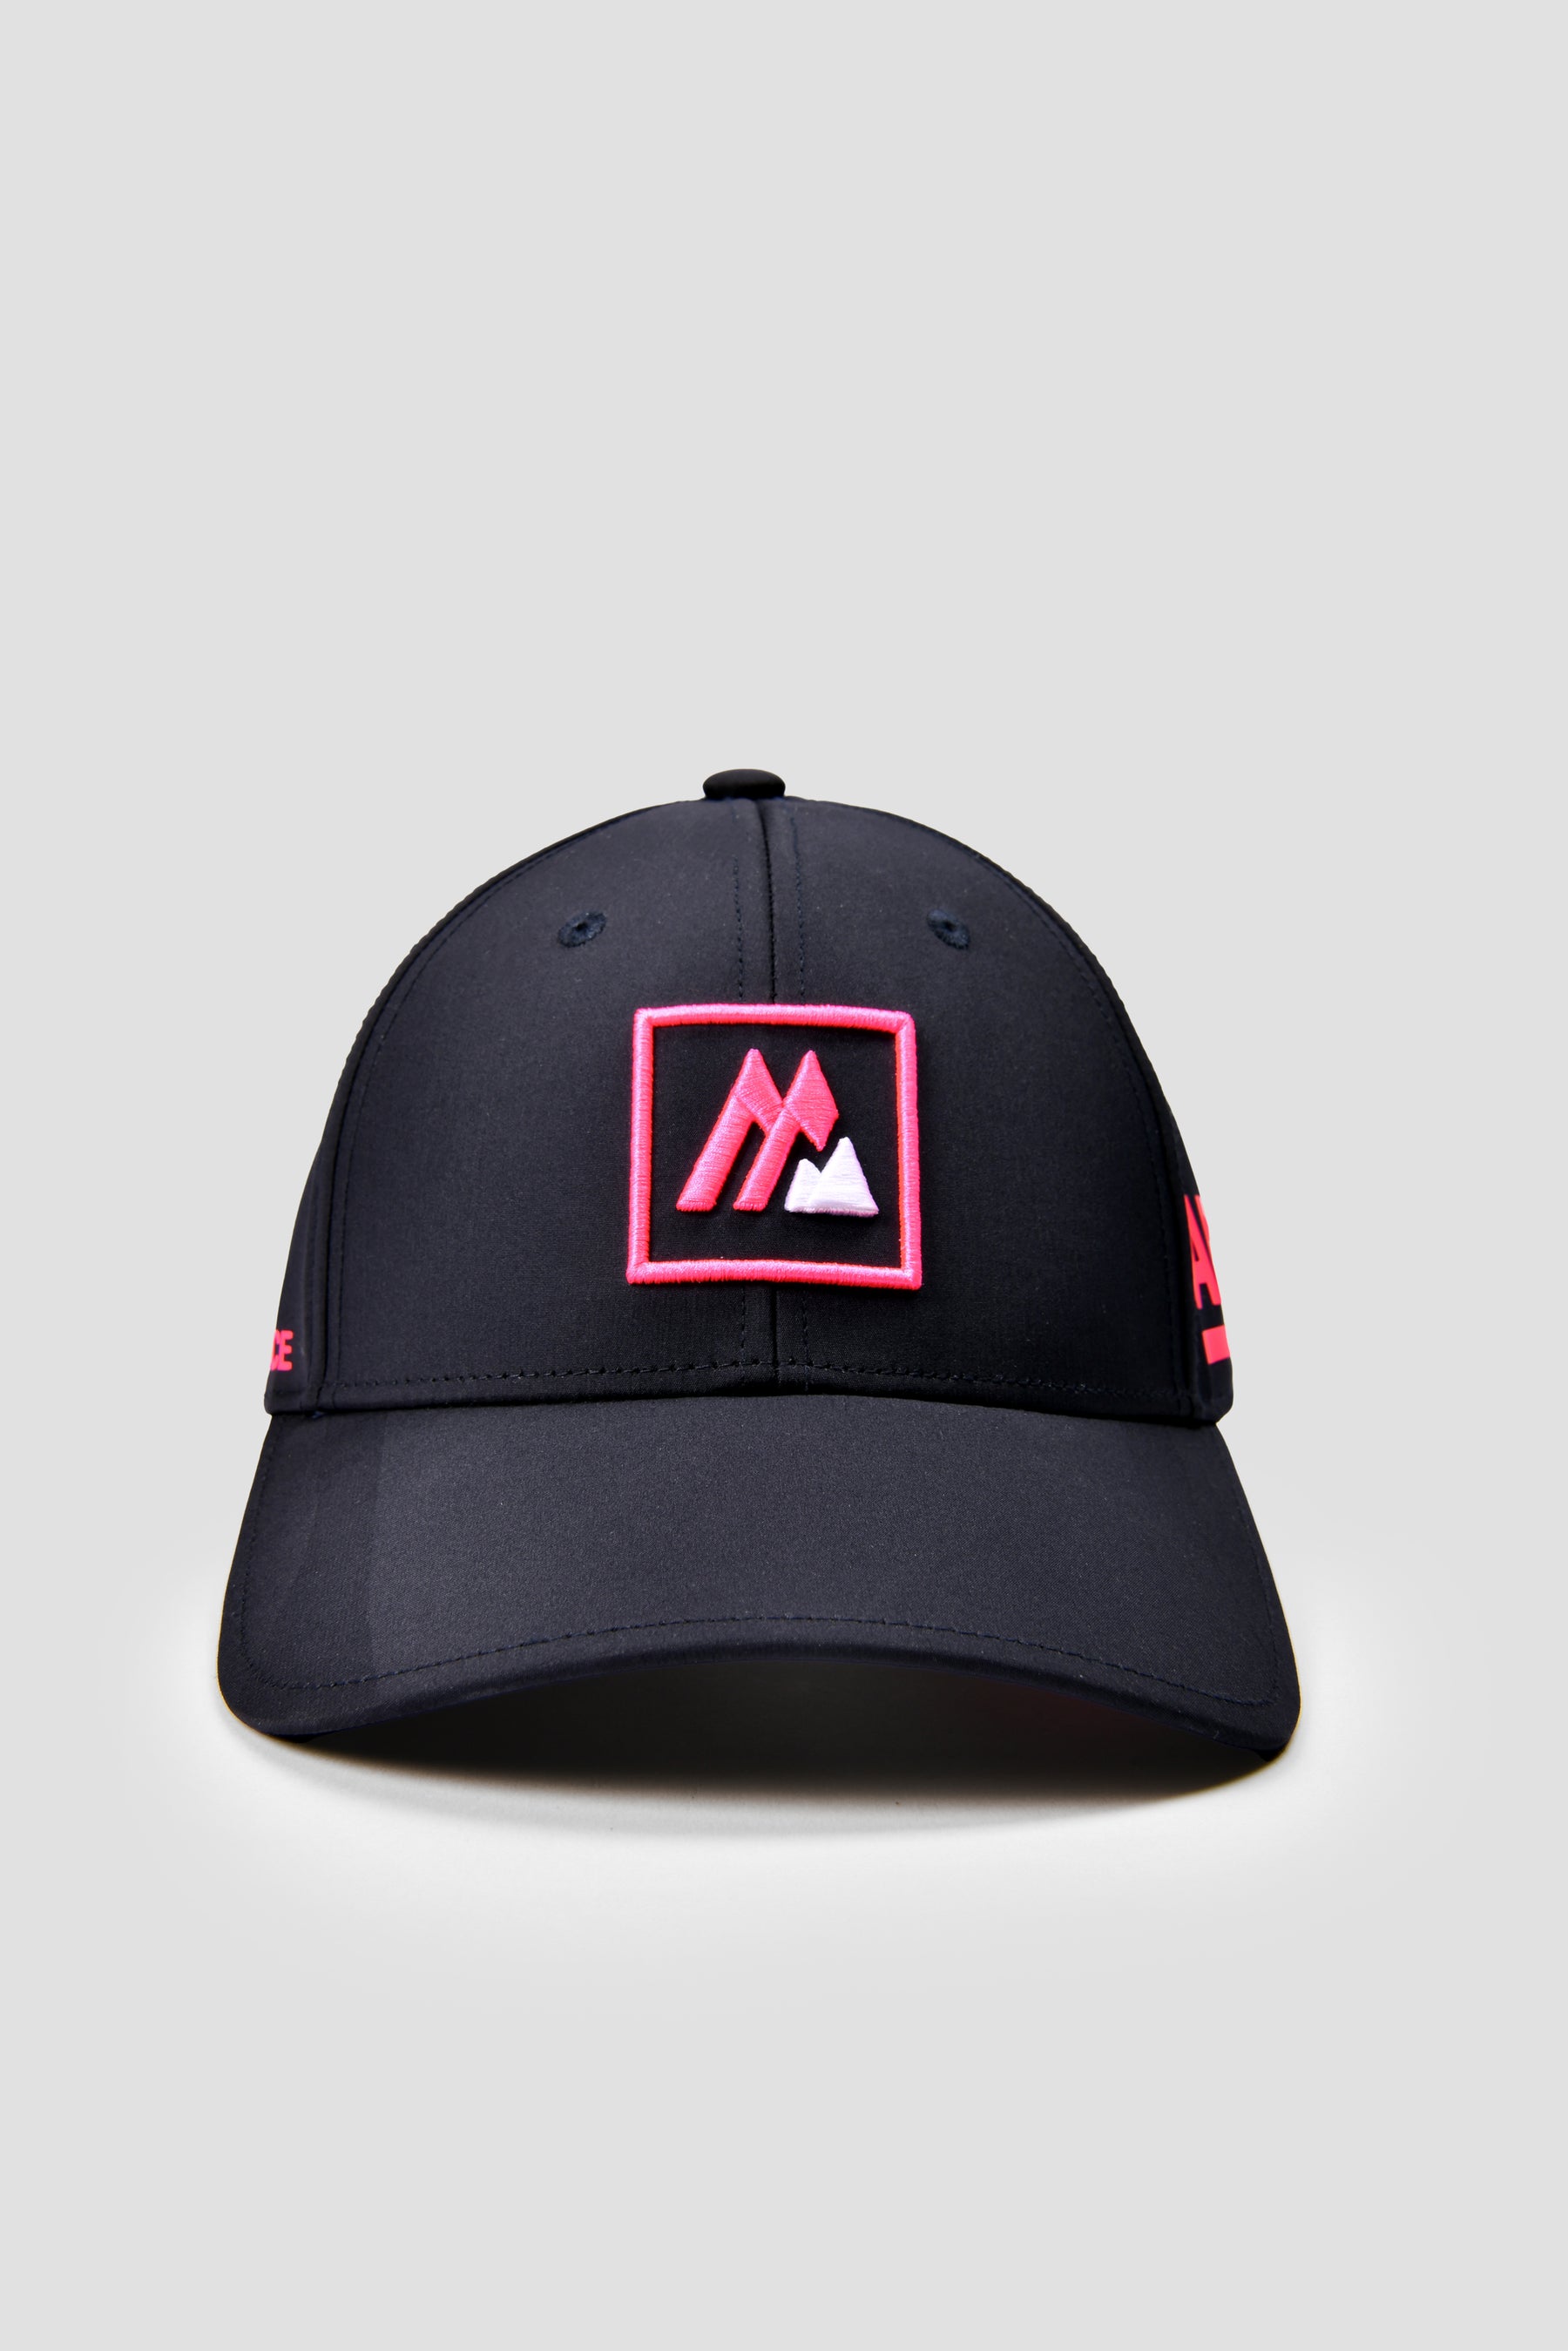 AP1 Tech Cap - Midnight Blue/Shocking Pink/White